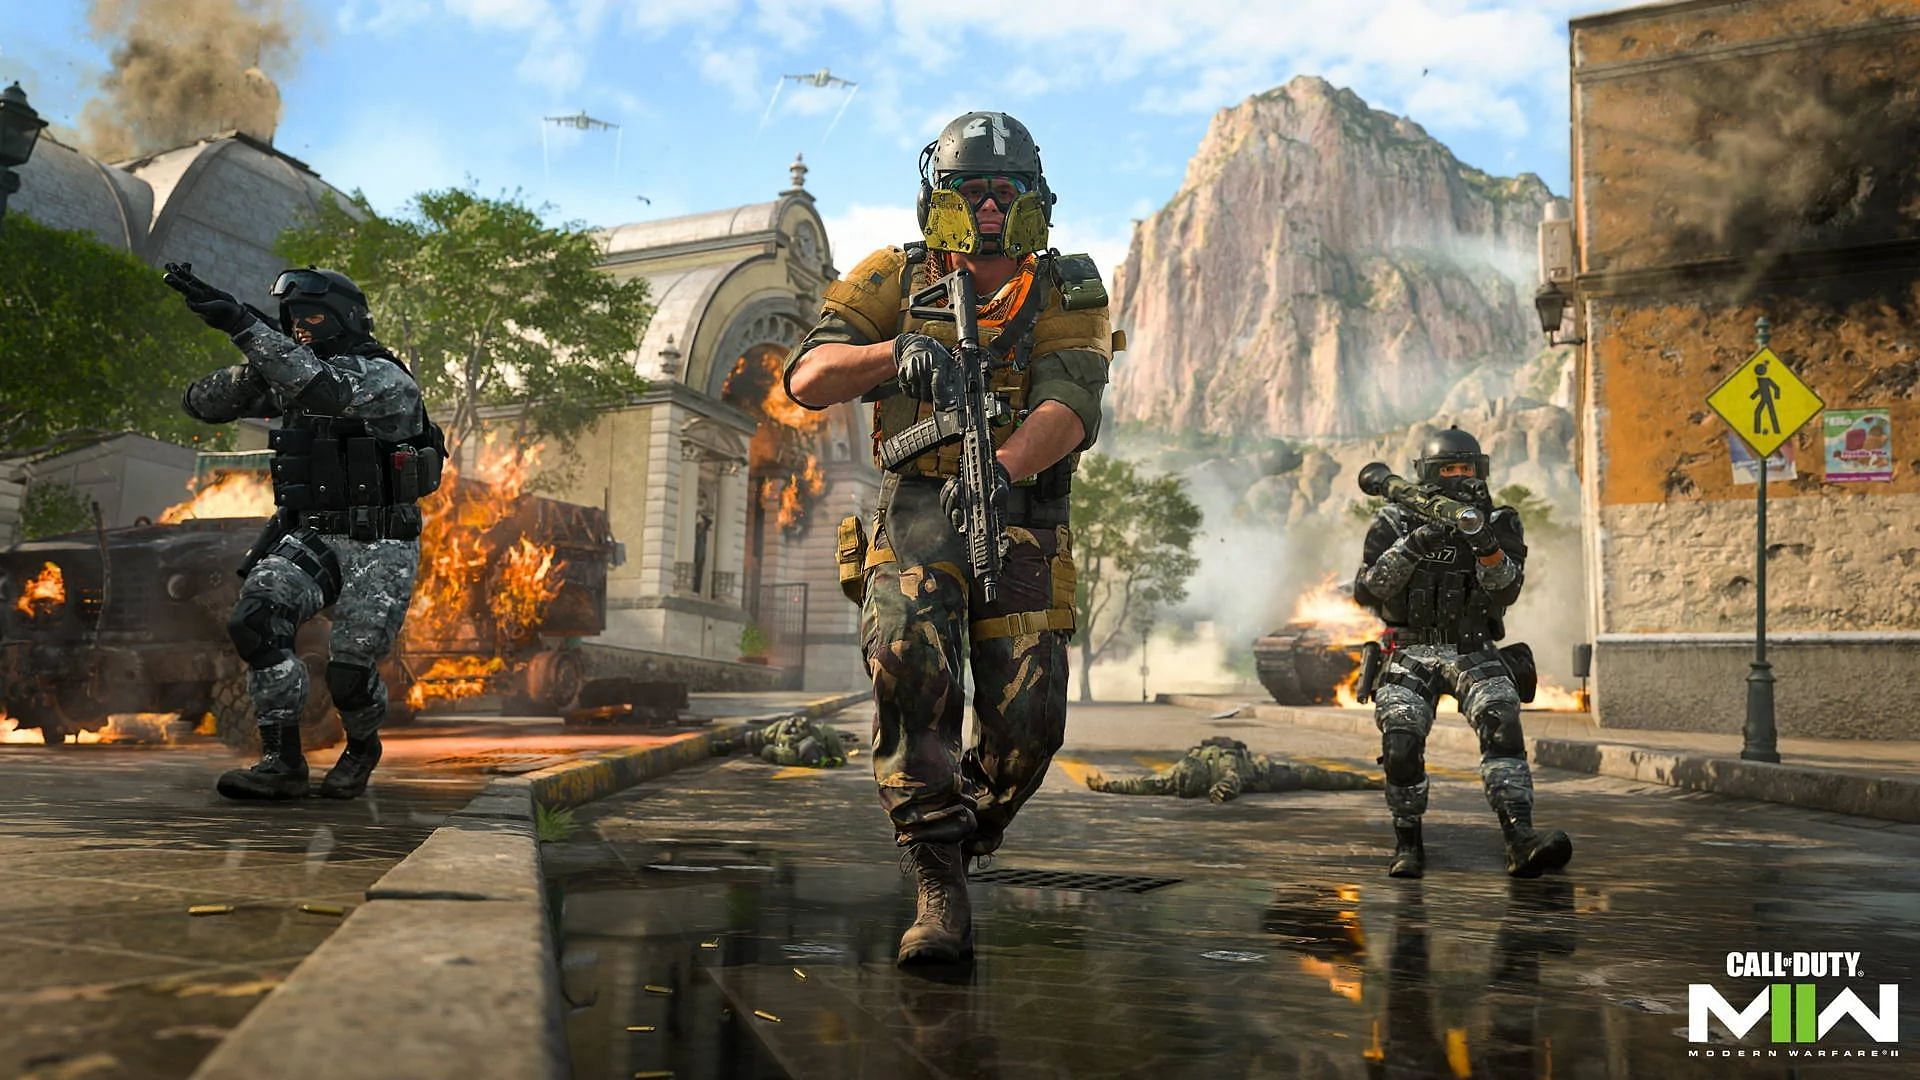 Will Call of Duty: Modern Warfare 2 Run on Your Laptop? - CNET